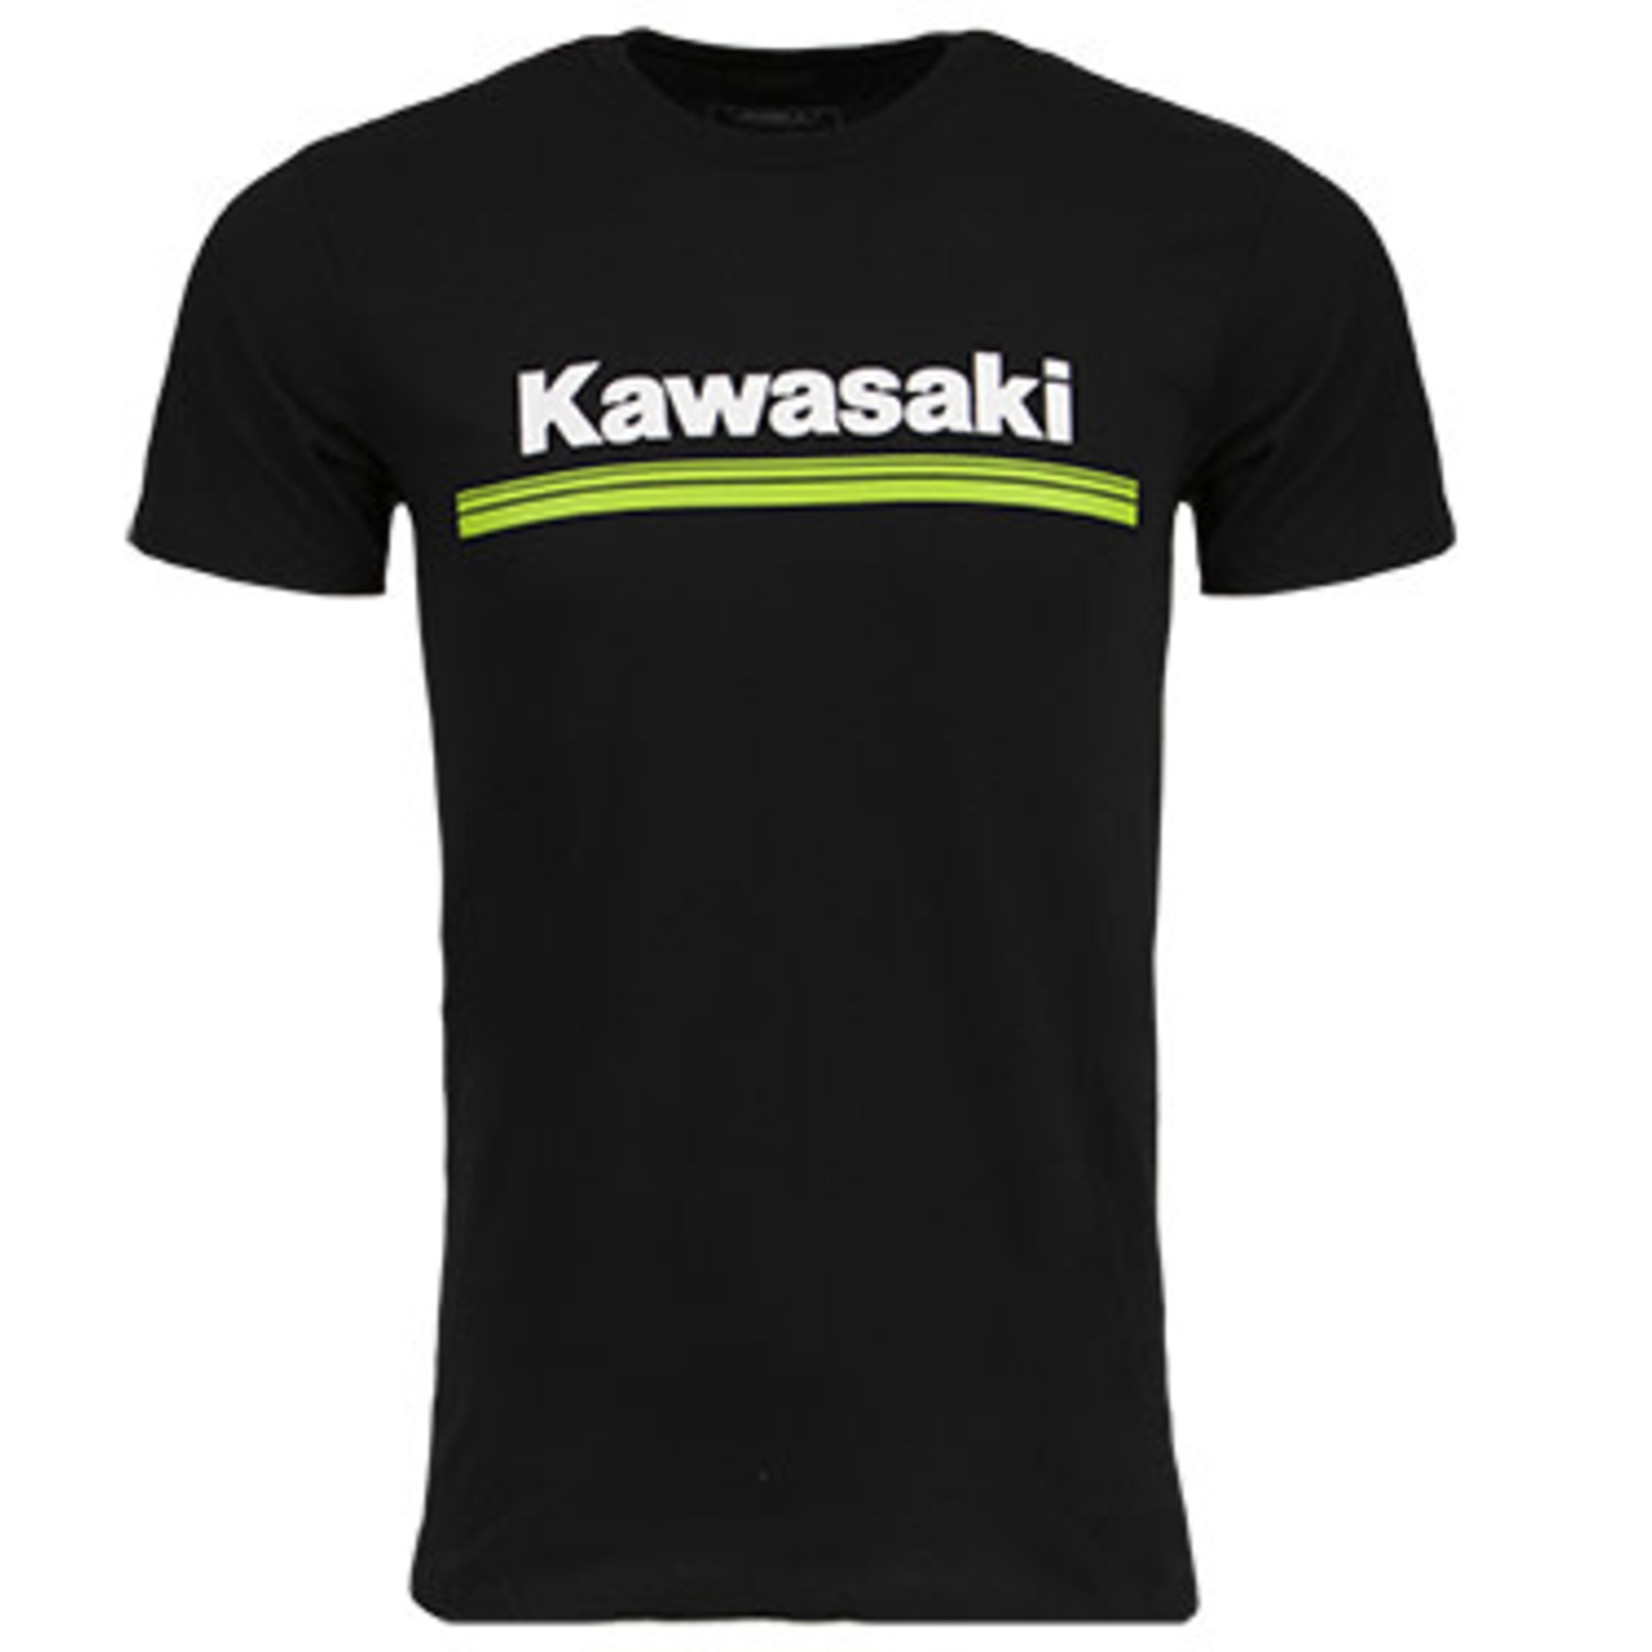 Kawasaki Kawasaki 3 Lines Tee